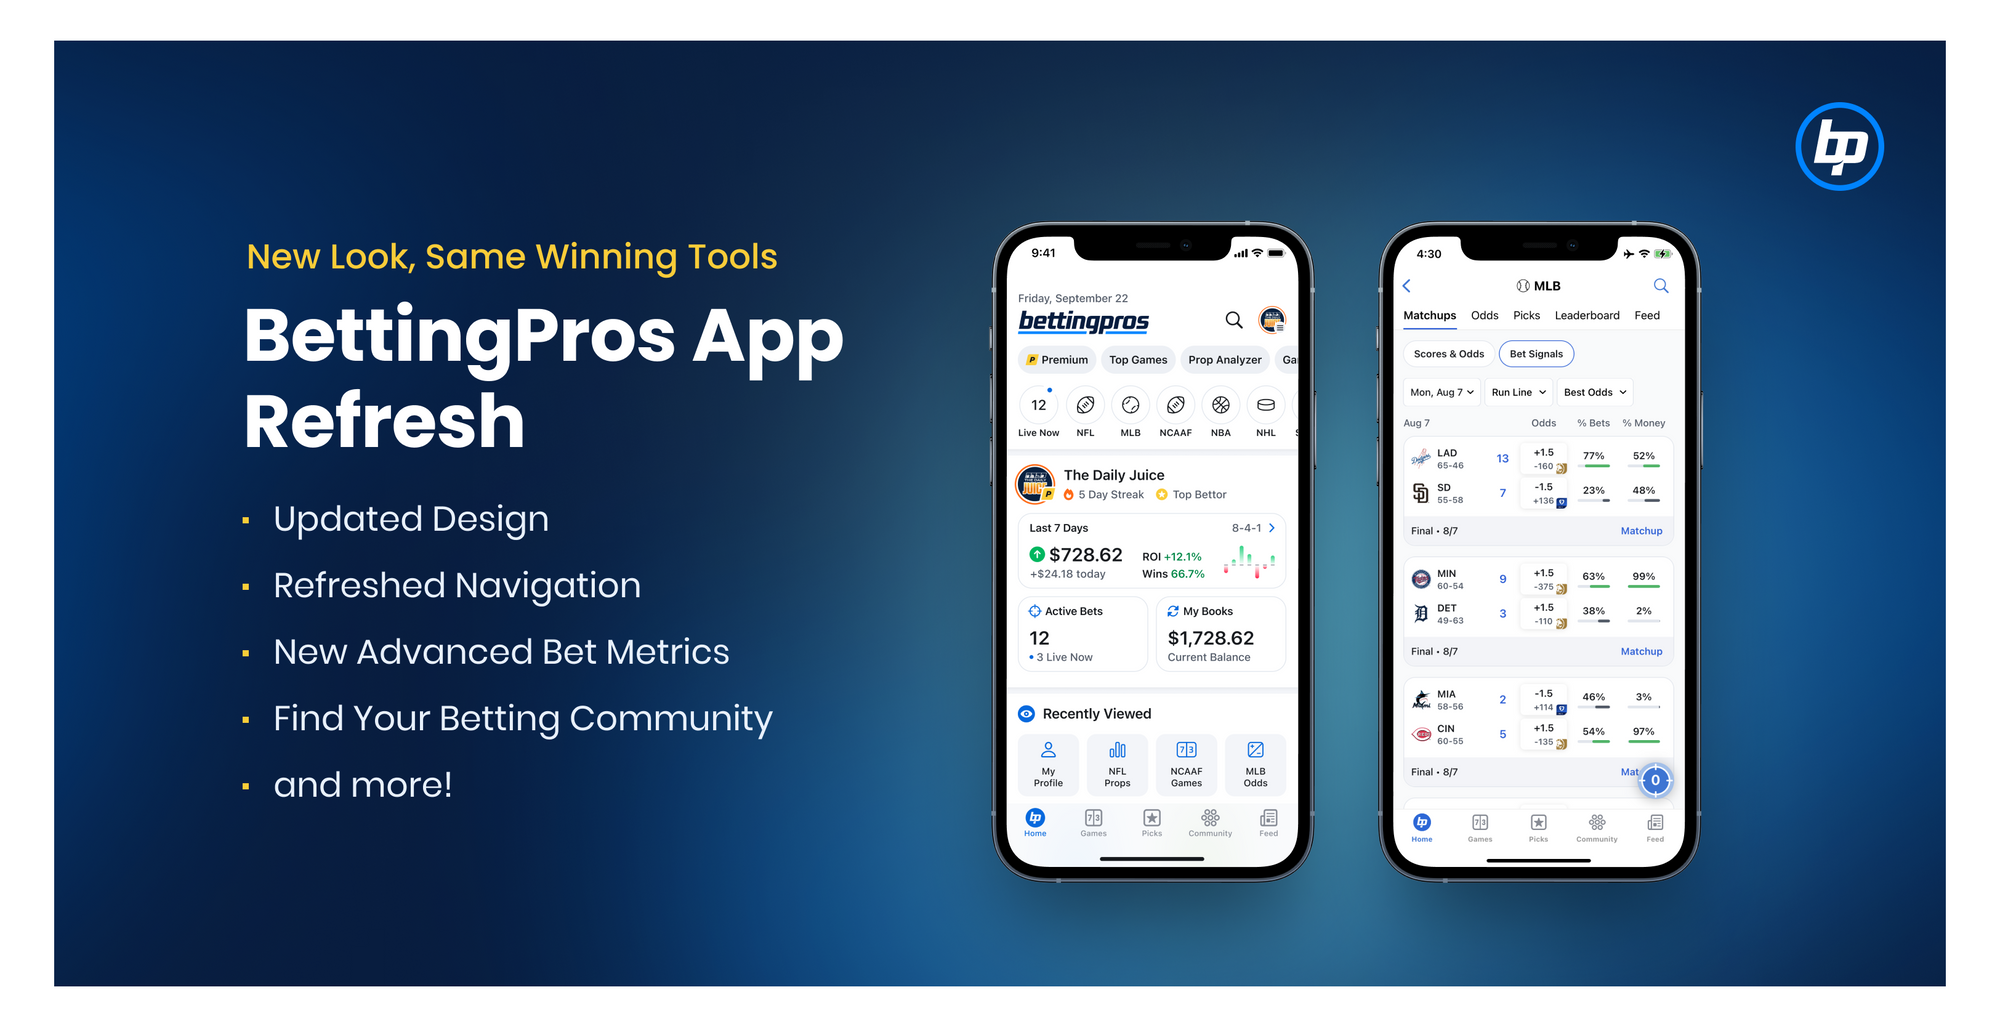 BettingPros App Refresh: A Winning Look to Match Winning Tools